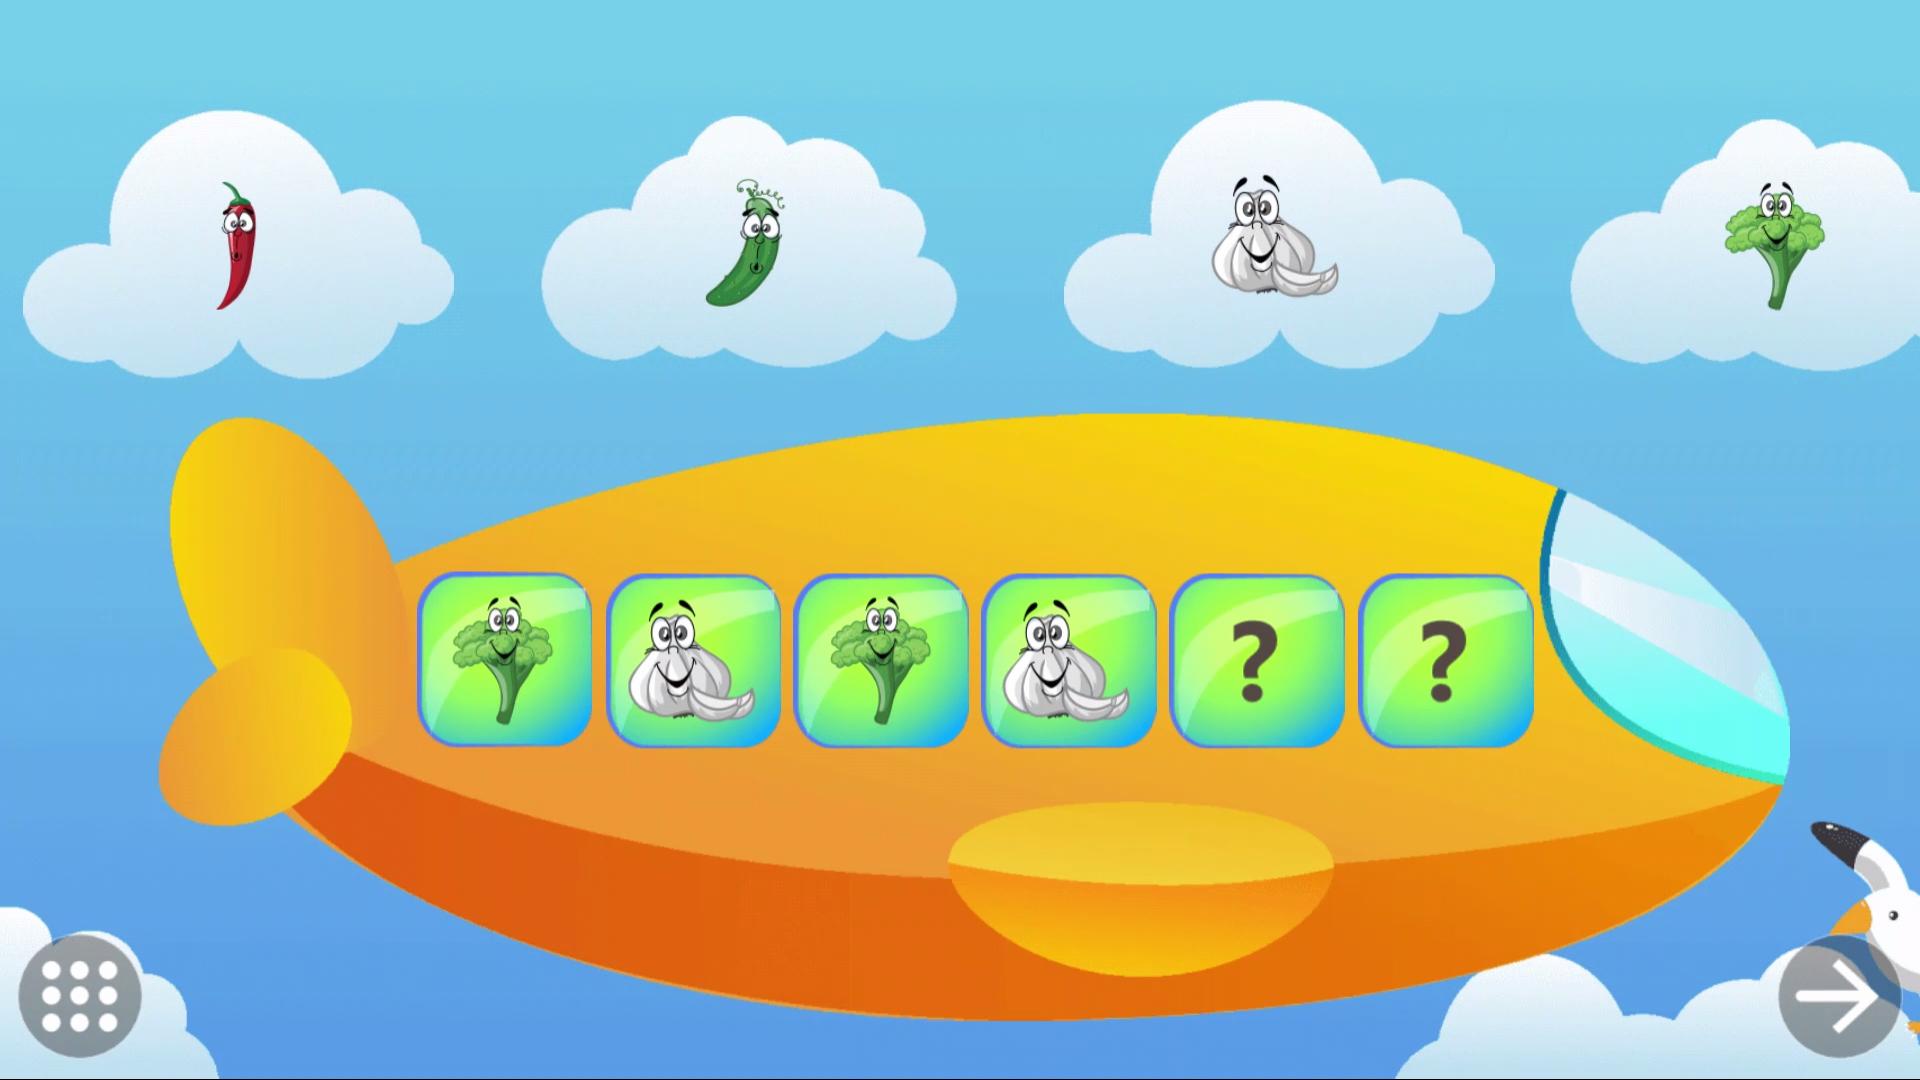 Kids Fun Learning - Educational Cool Math Games 1.0.2.0 Screenshot 13